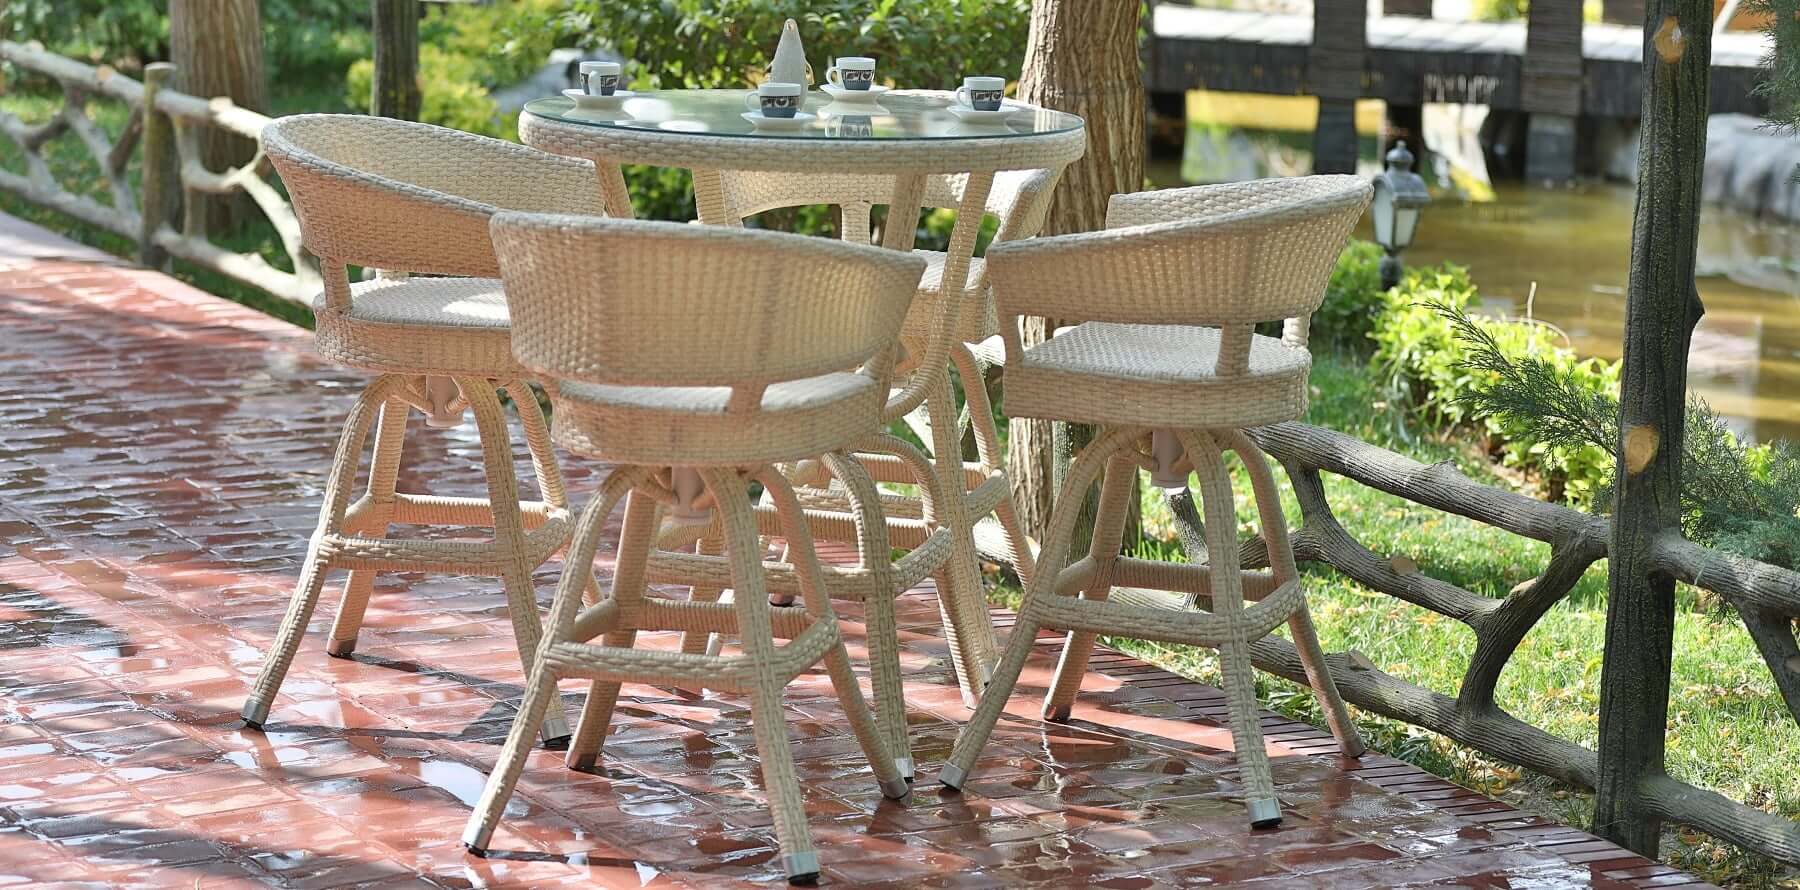 decorose patio bar furniture siatel model0 - صندلی بار گردان حصیری مدل واران -  - patio-bar-stools